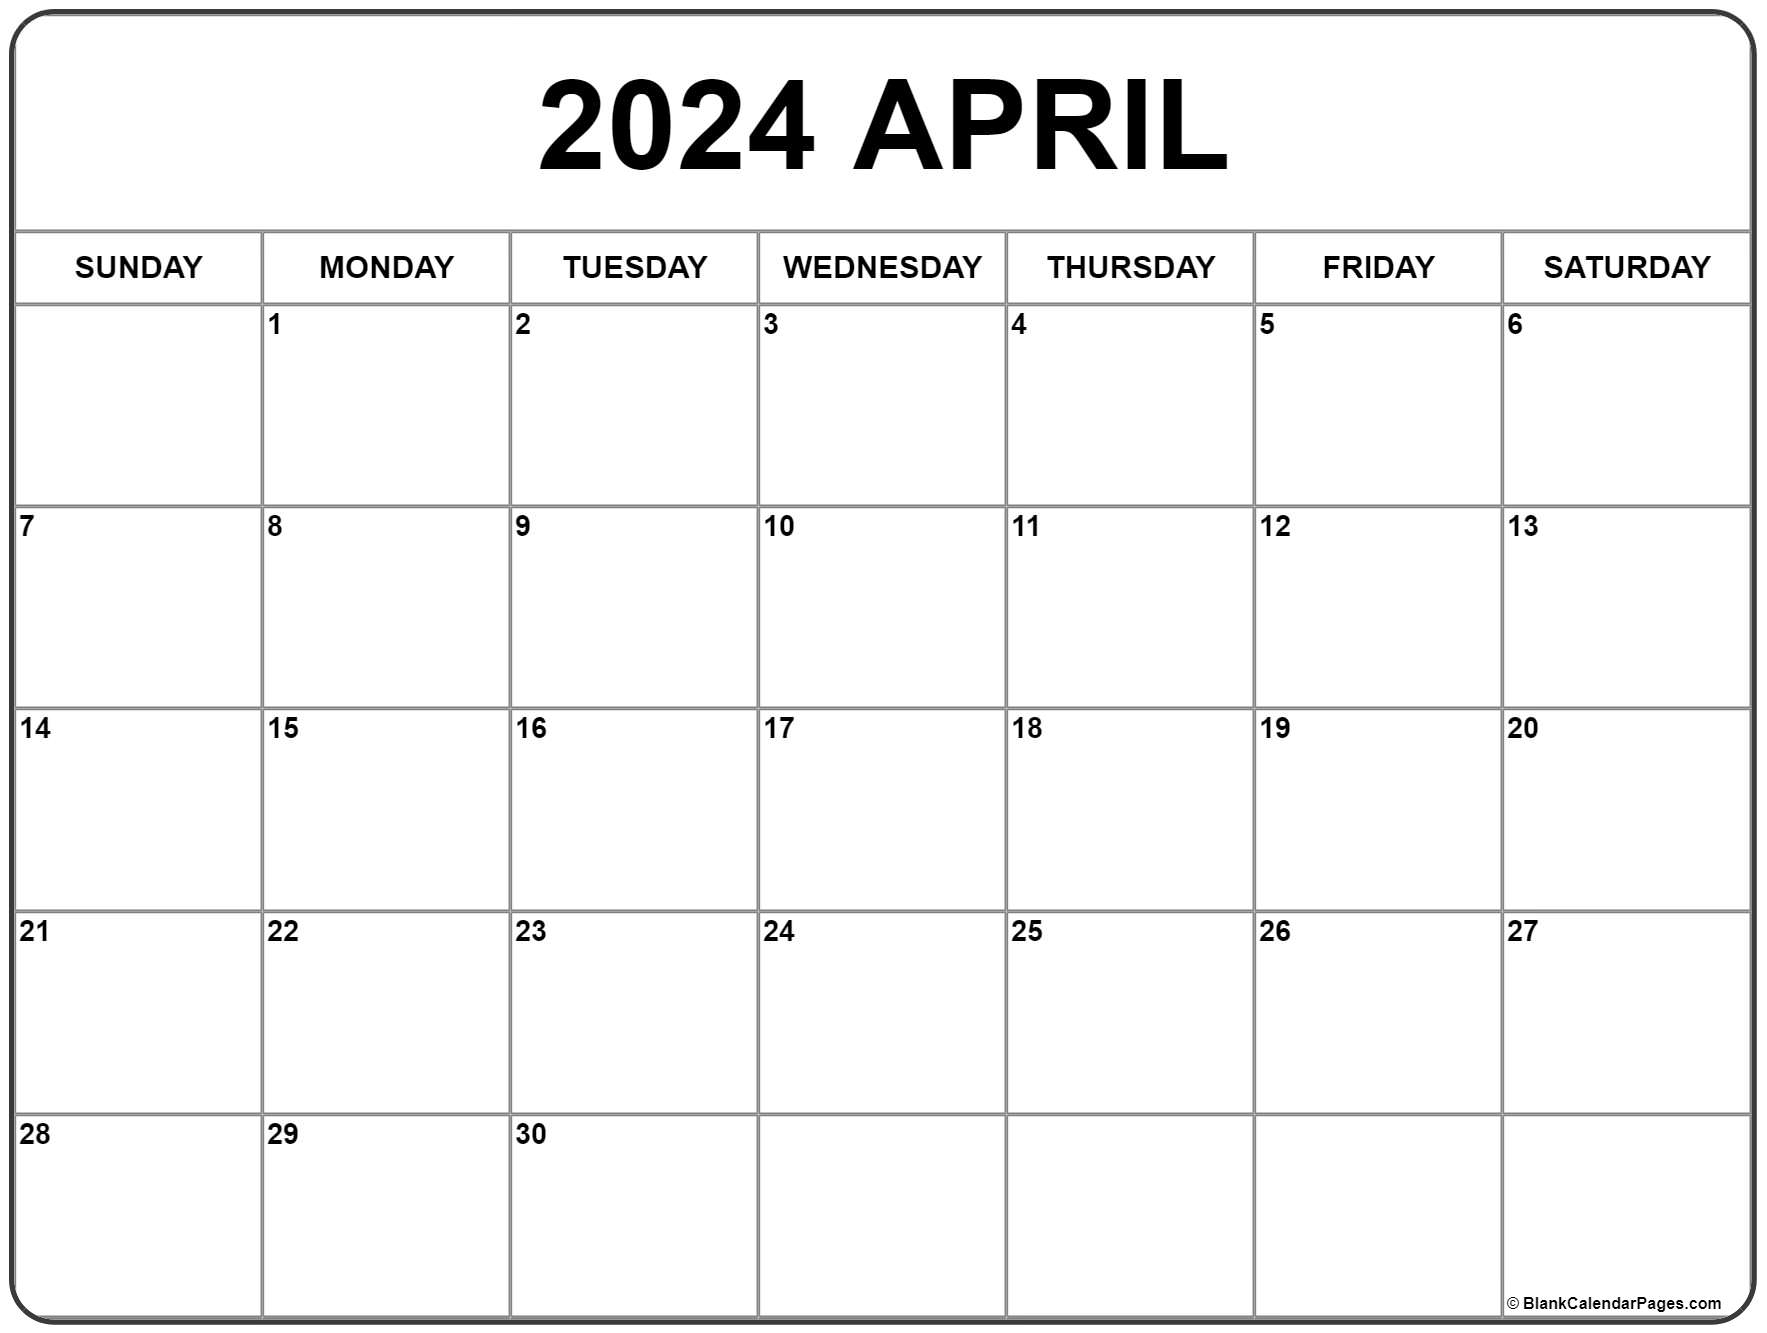 April 2024 Calendar | Free Printable Calendar regarding Google Calendar April 2024